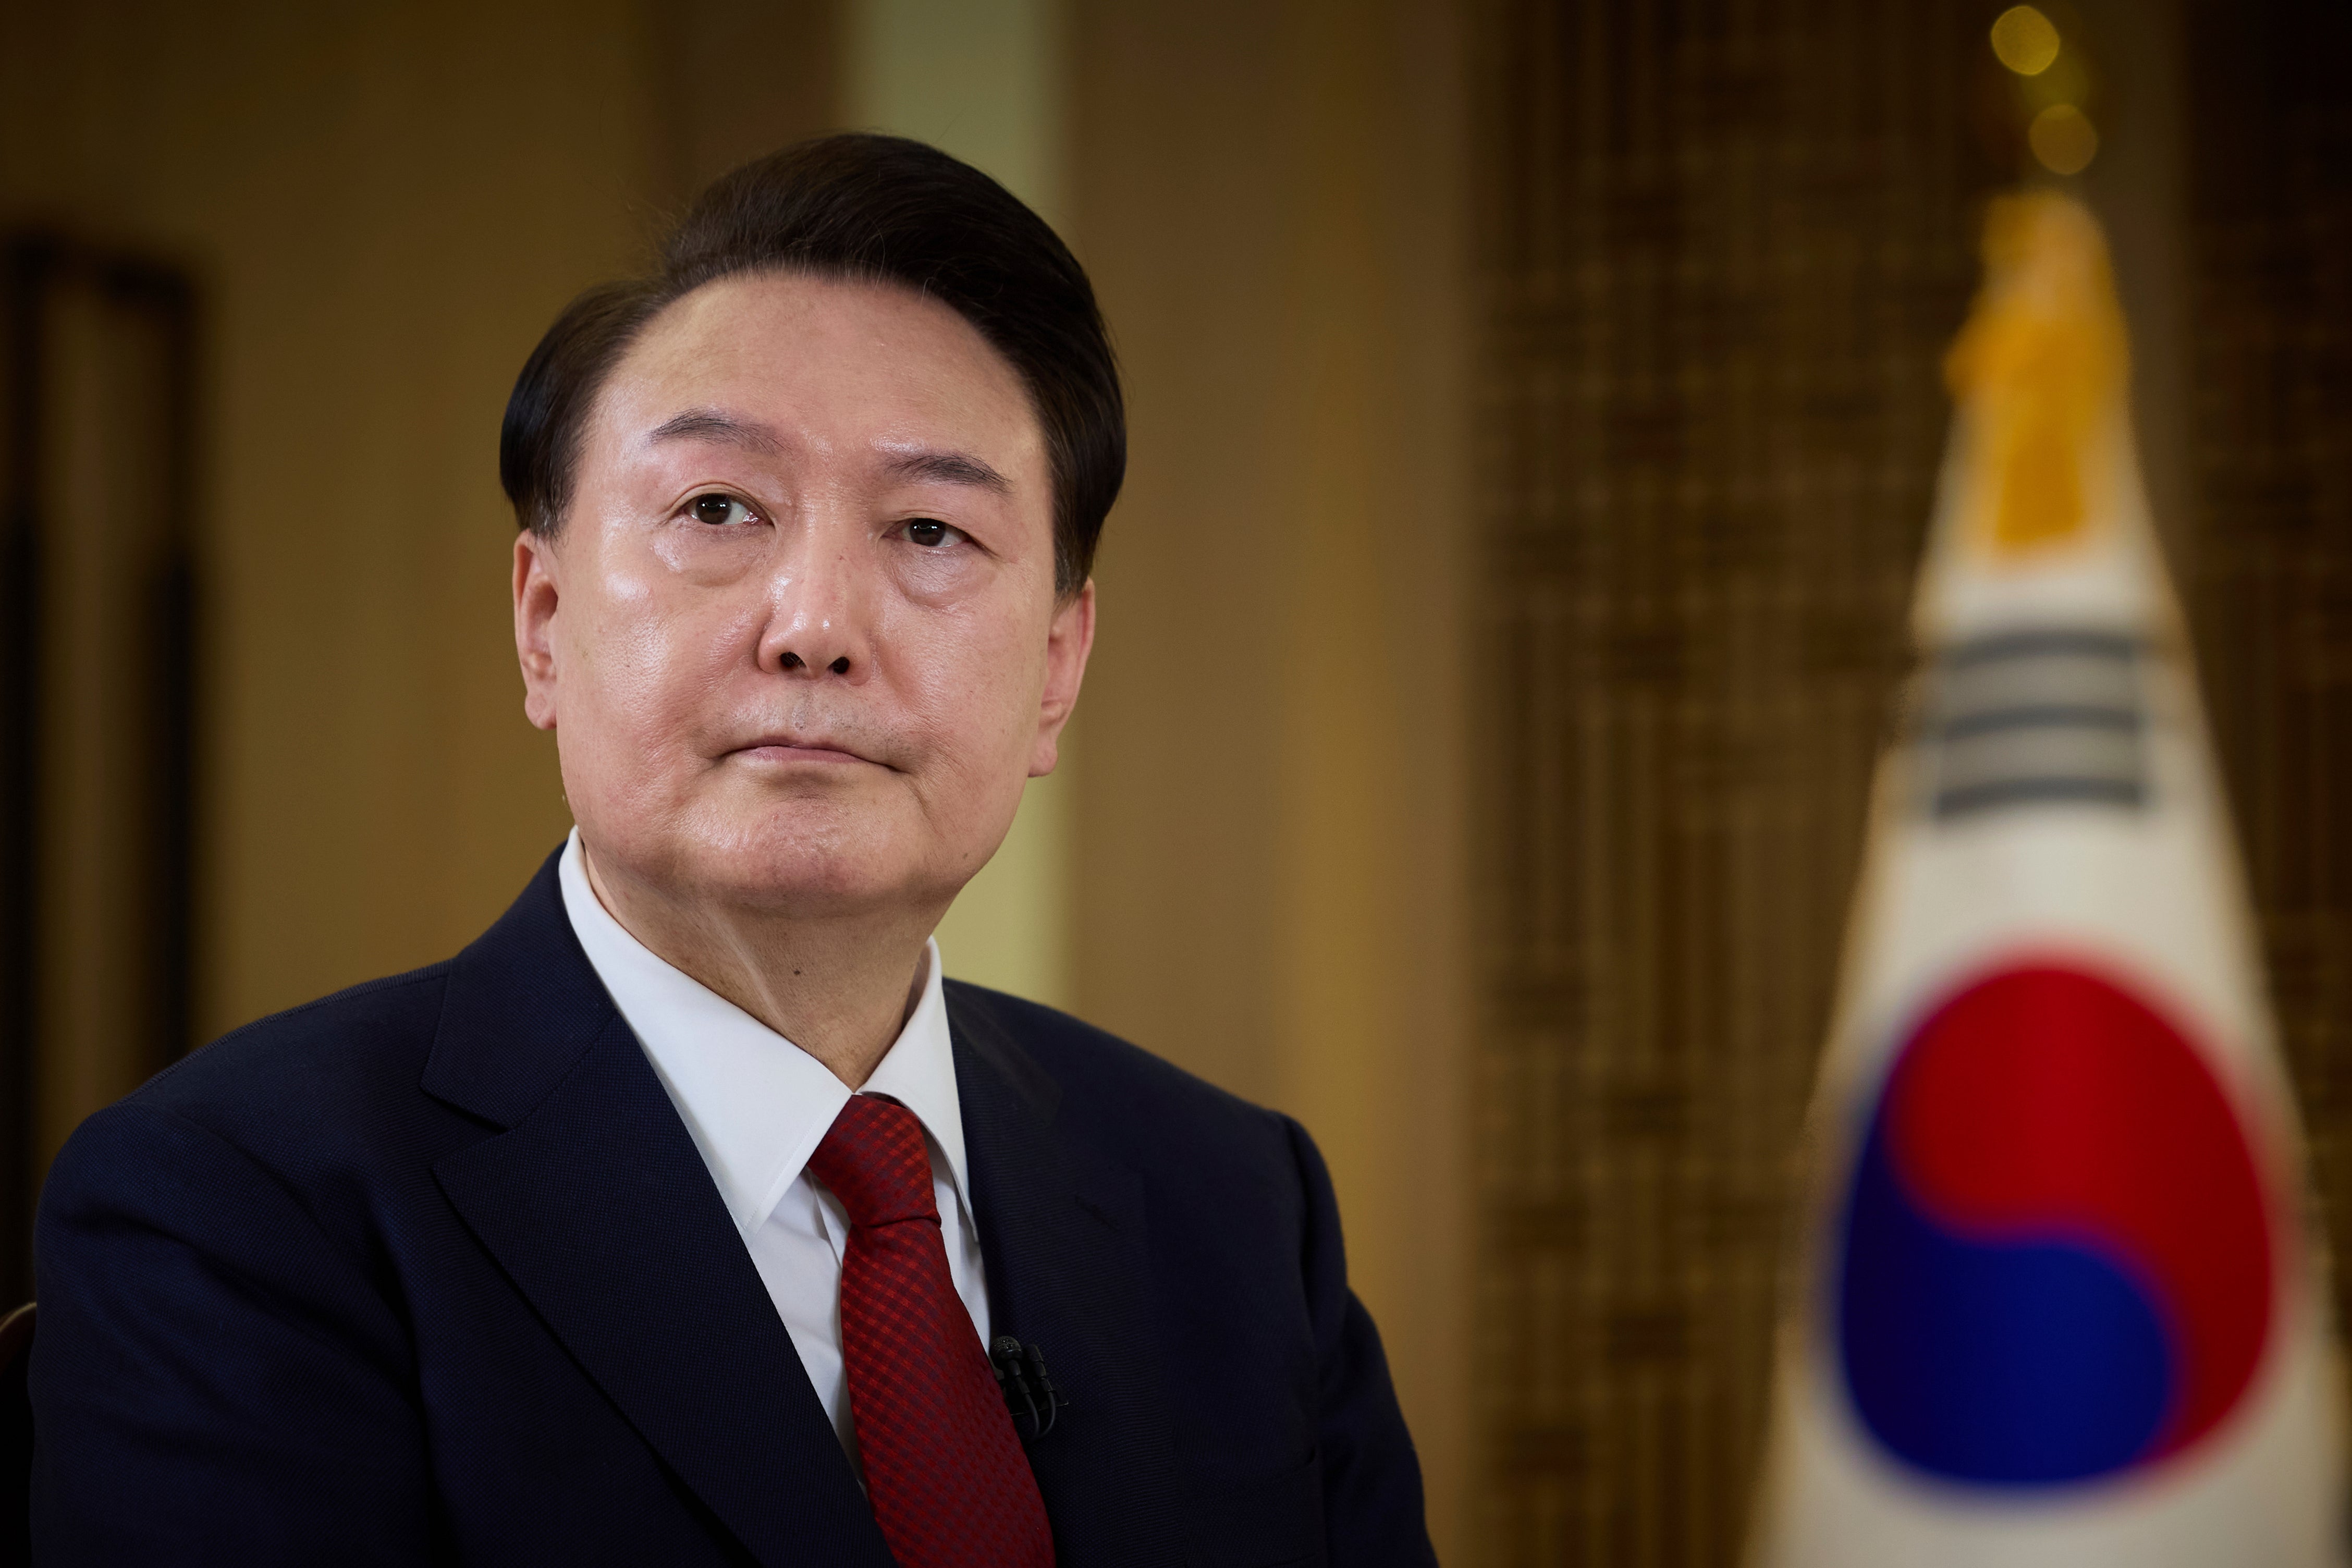 South Korea’s president Yoon Suk Yeol